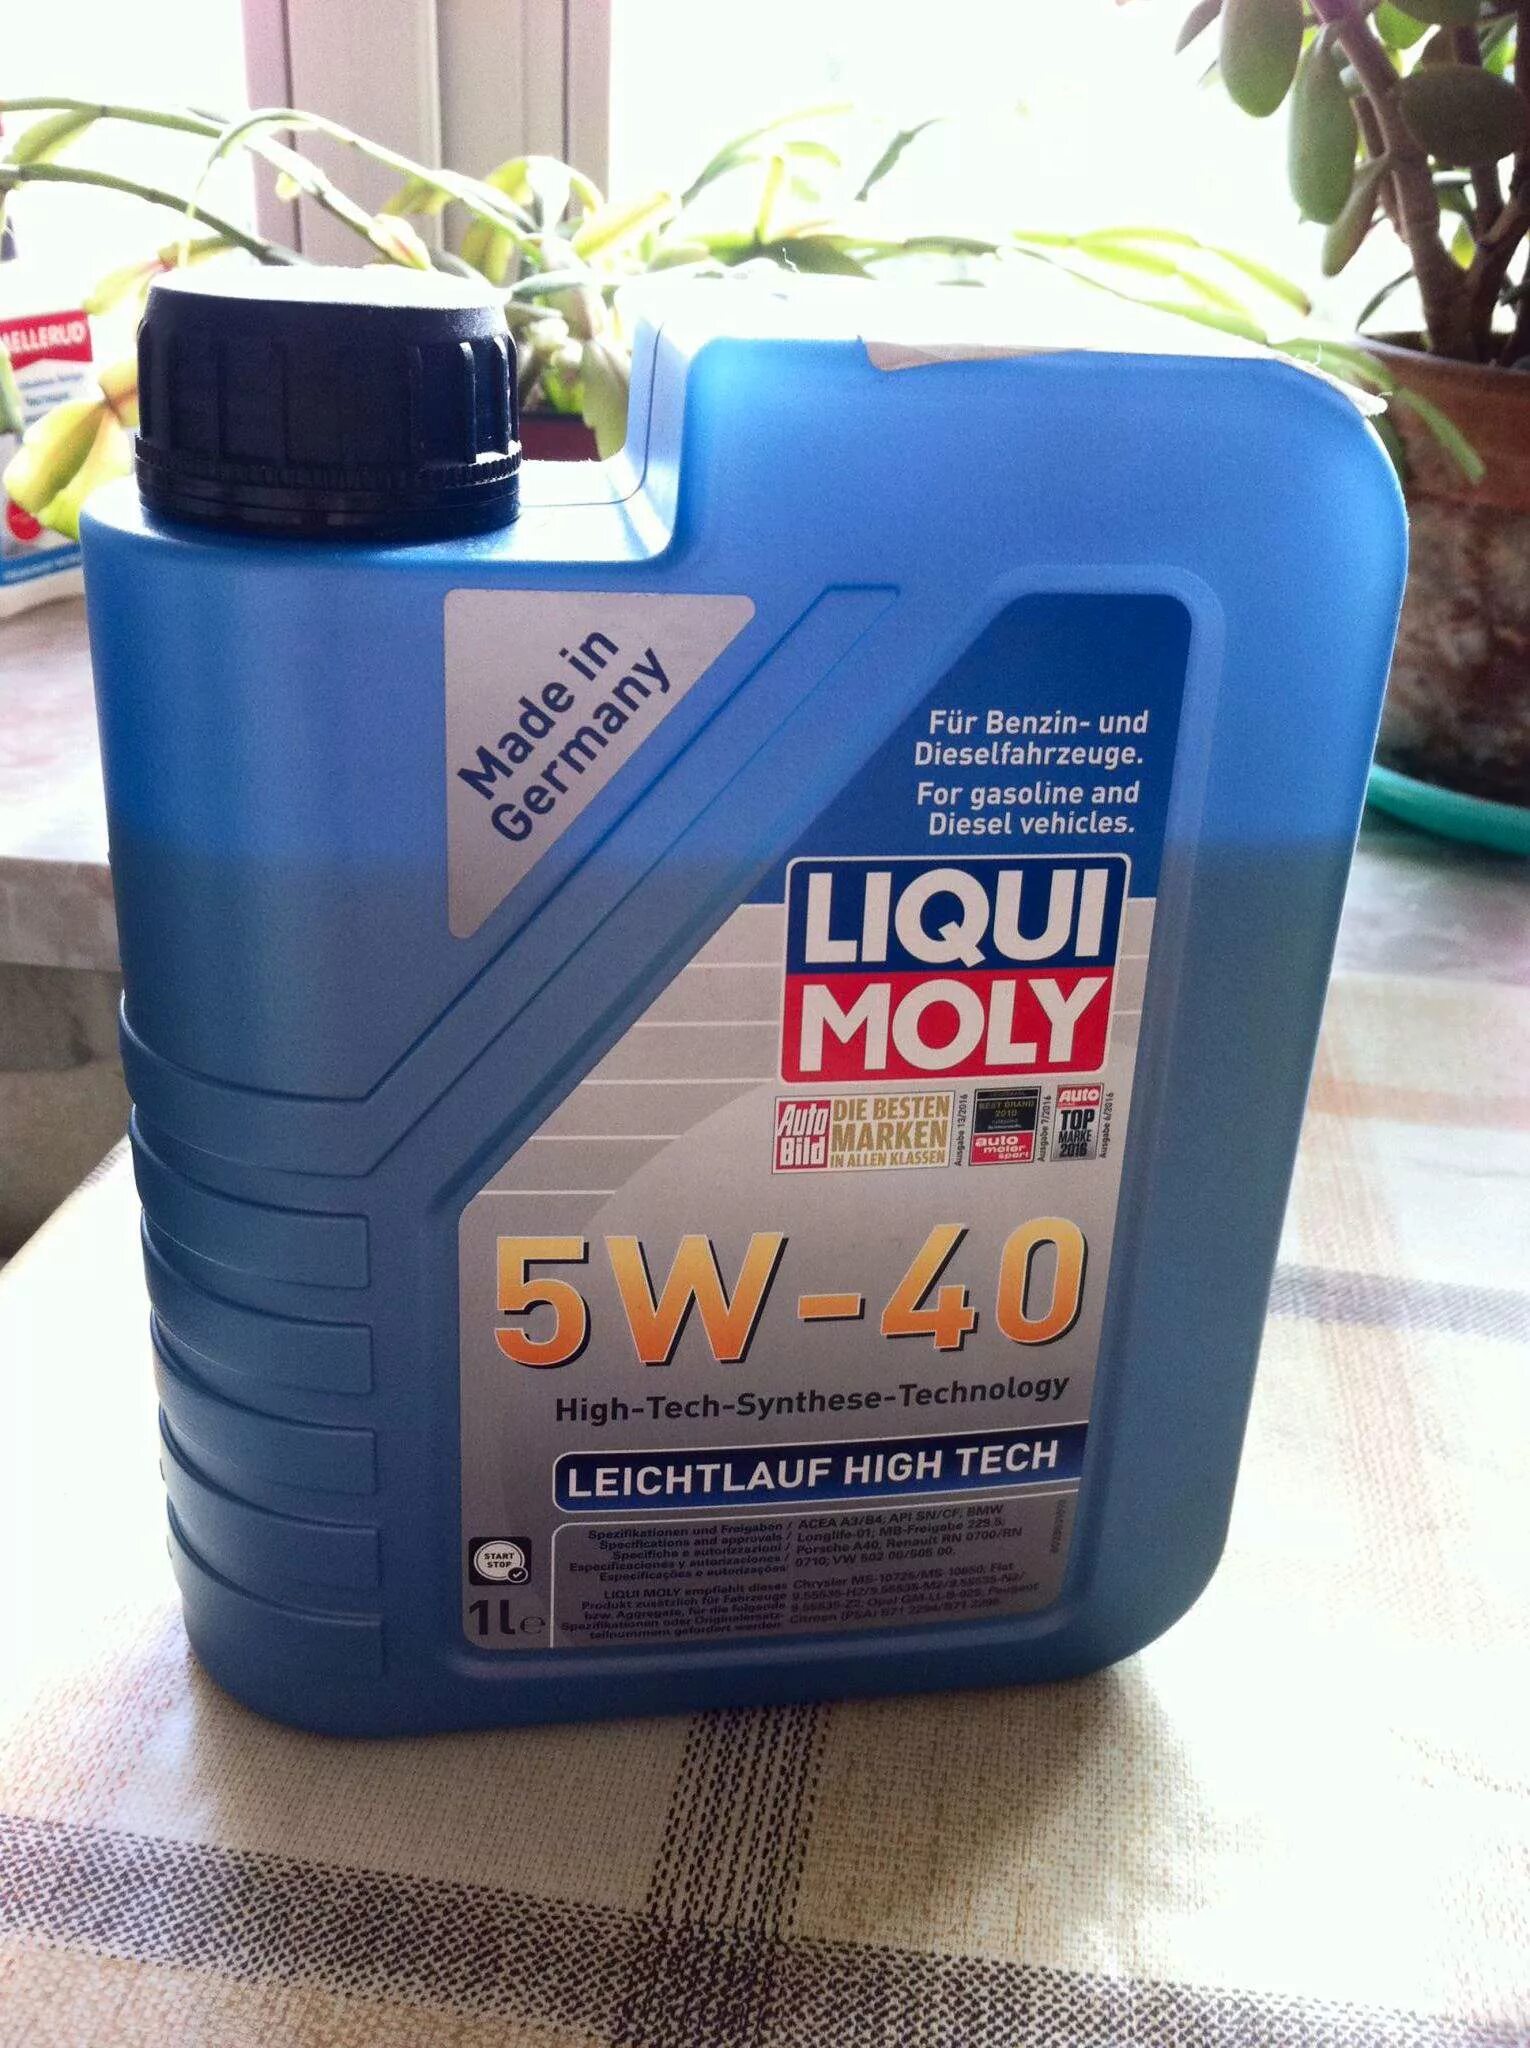 Купить моторное масло ликви моли 5w40. Liqui Moly ll 5w-40. Liqui Moly Leichtlauf High Tech 5w-40. Масло Ликви моли 5w40 синтетика. Масло Ликви моли 5w40 полусинтетика.